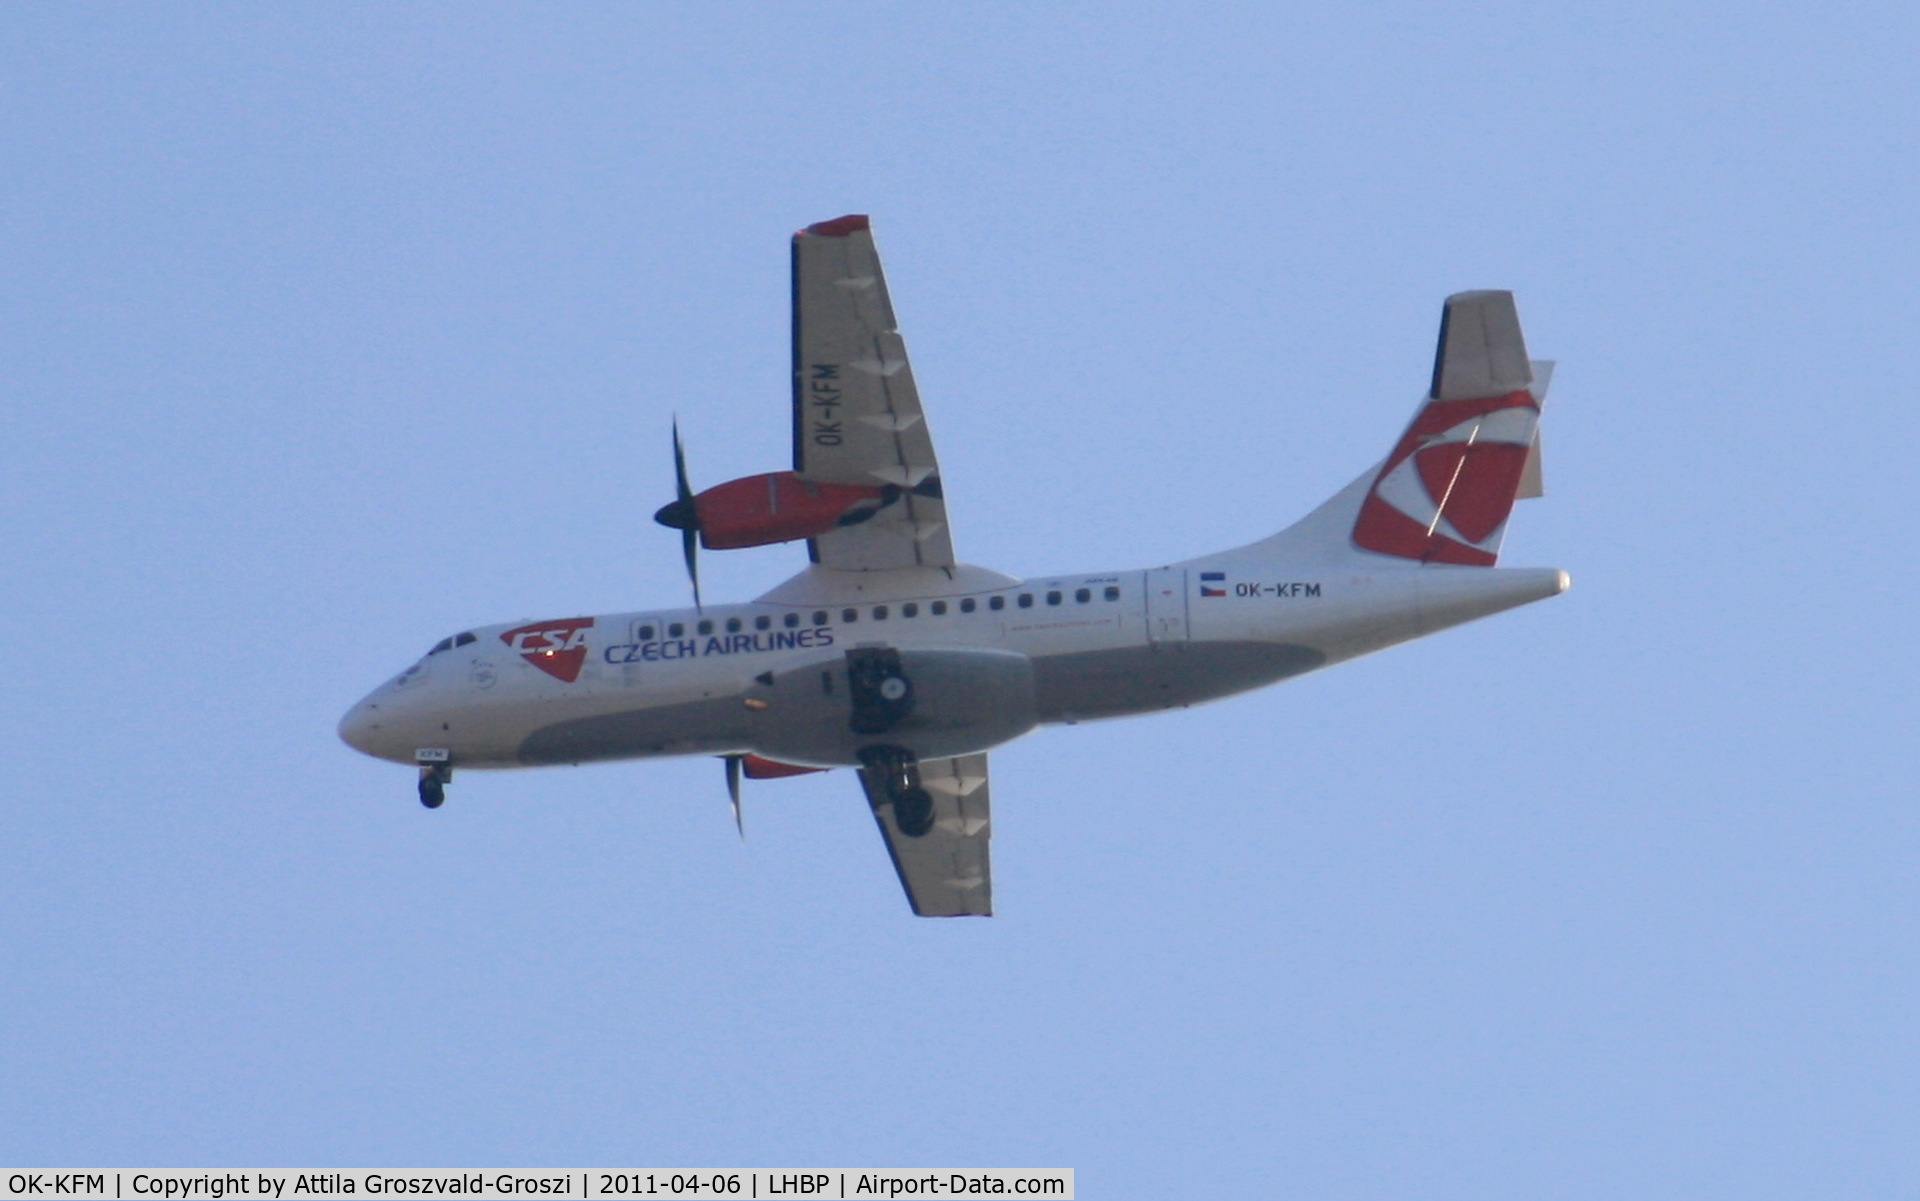 OK-KFM, 2005 ATR 42-500 C/N 635, On a landing direction, in Üllö city airspace.